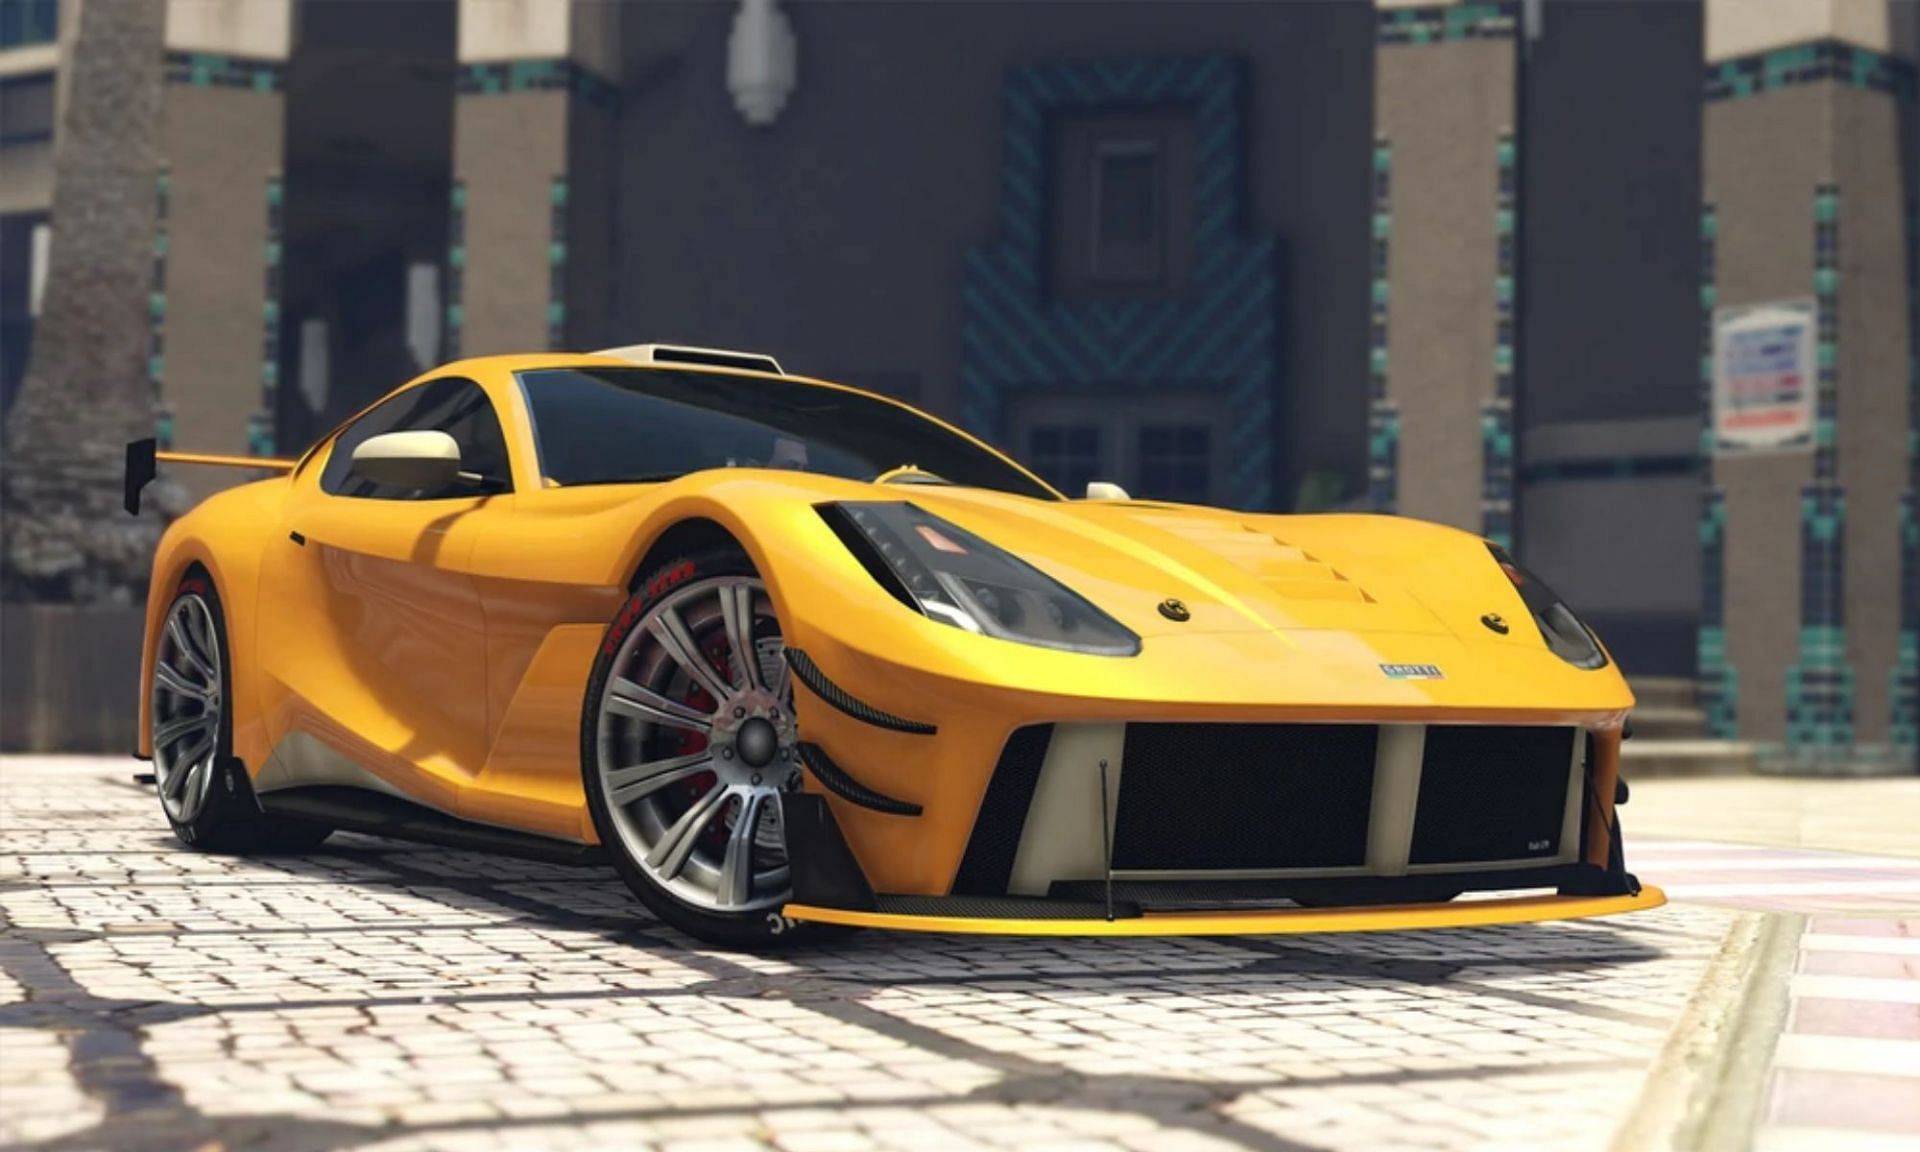 The Itali GTO is on display at Luxury Autos Showroom (Image via Rockstar Games)